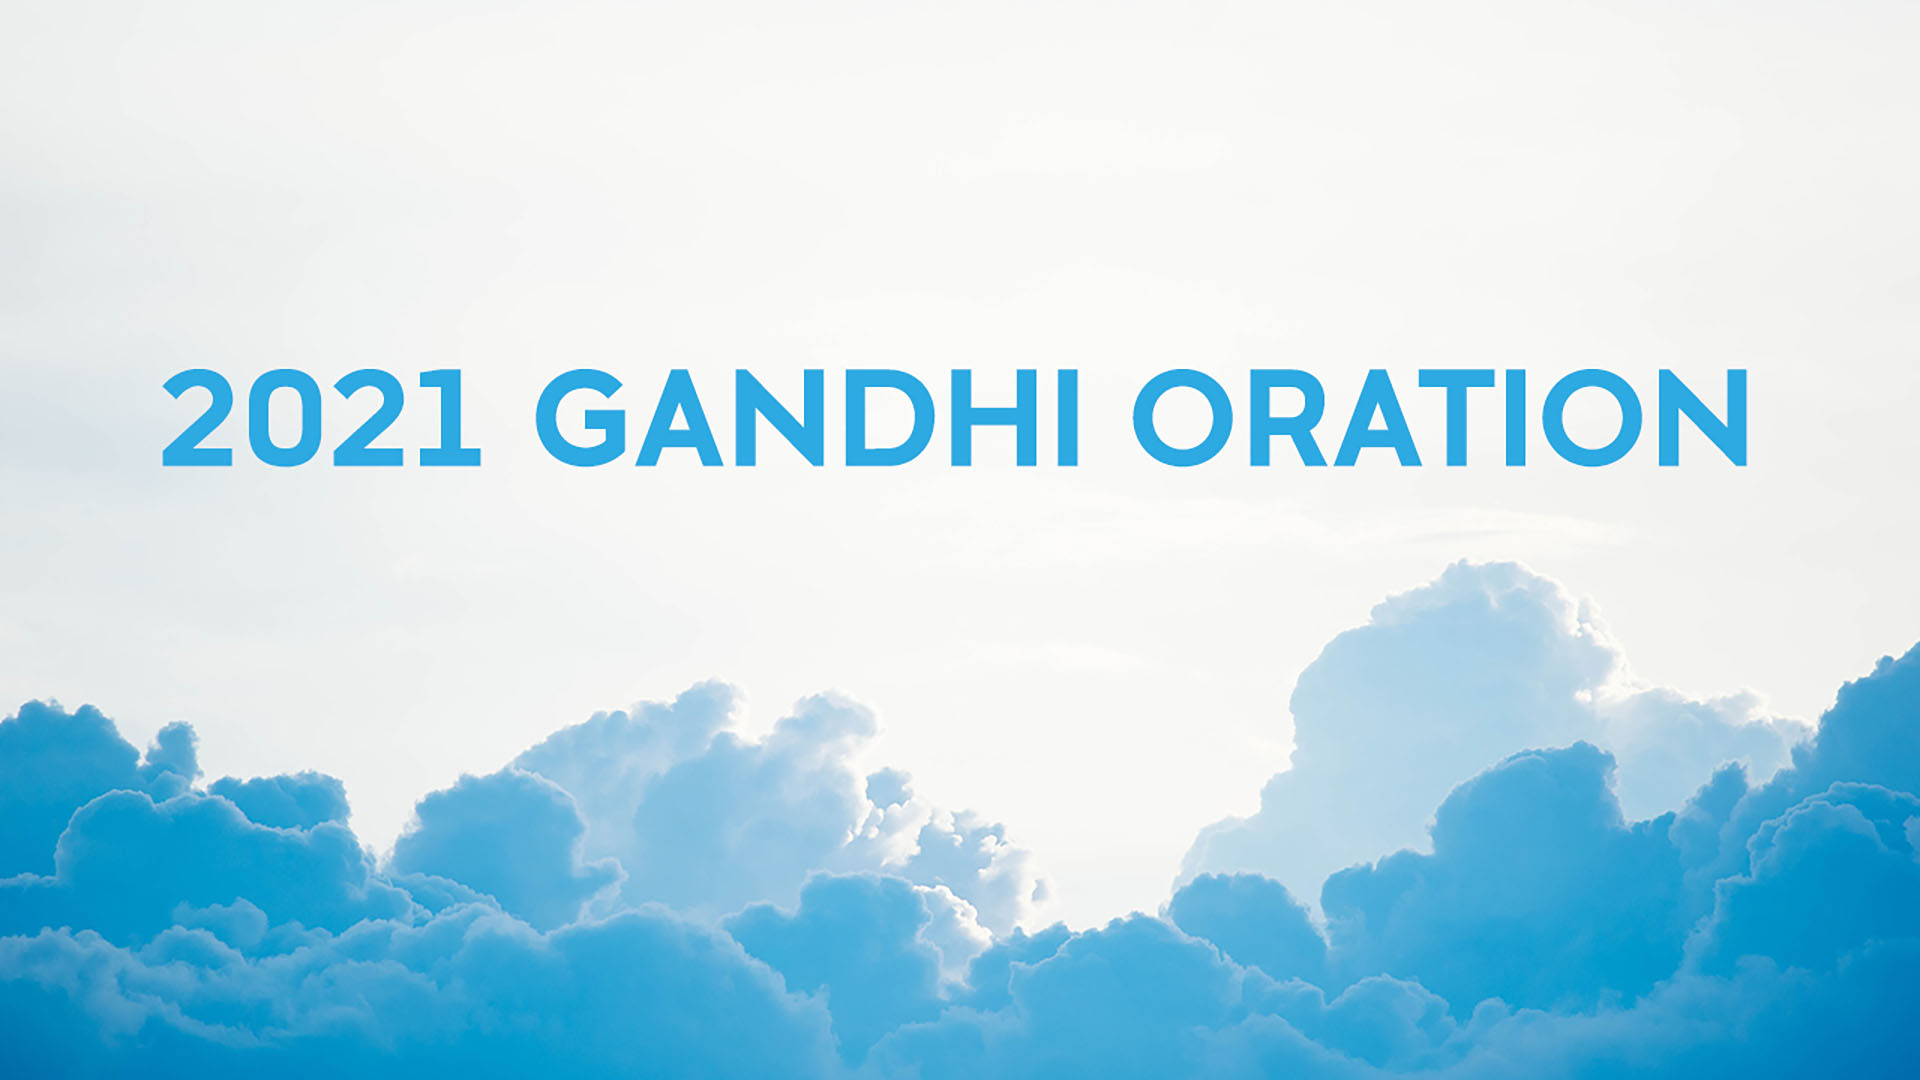 2021 Gandhi Oration